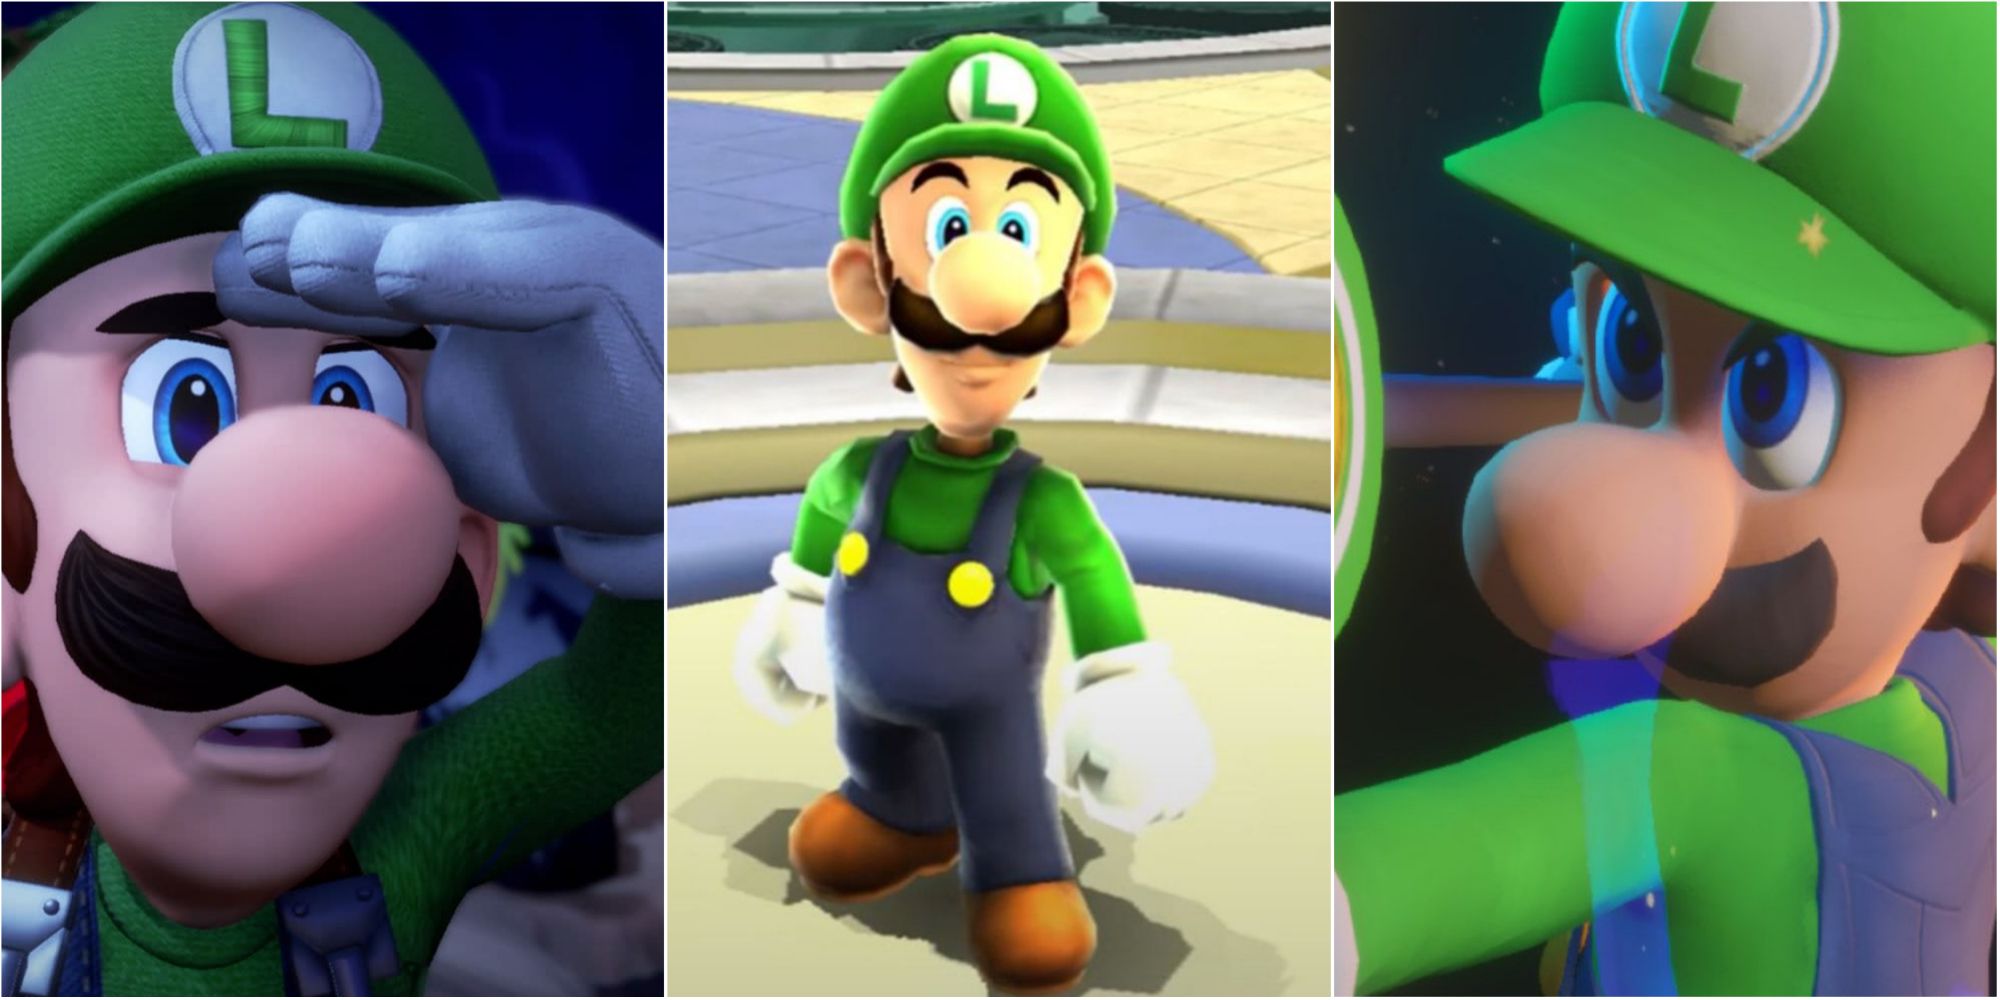 How to play as Luigi (as 1P) in Super Mario World